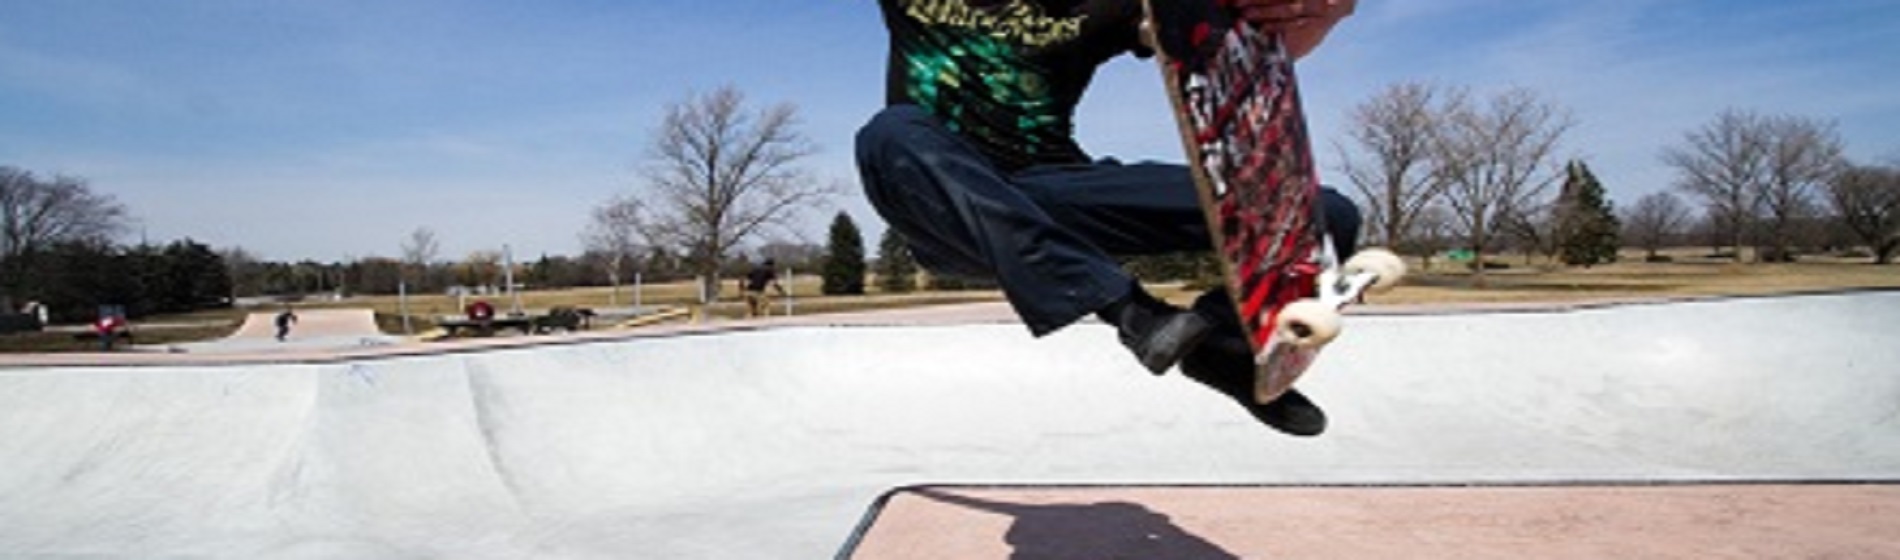 cropped image of skateboarder going aerial at skate park